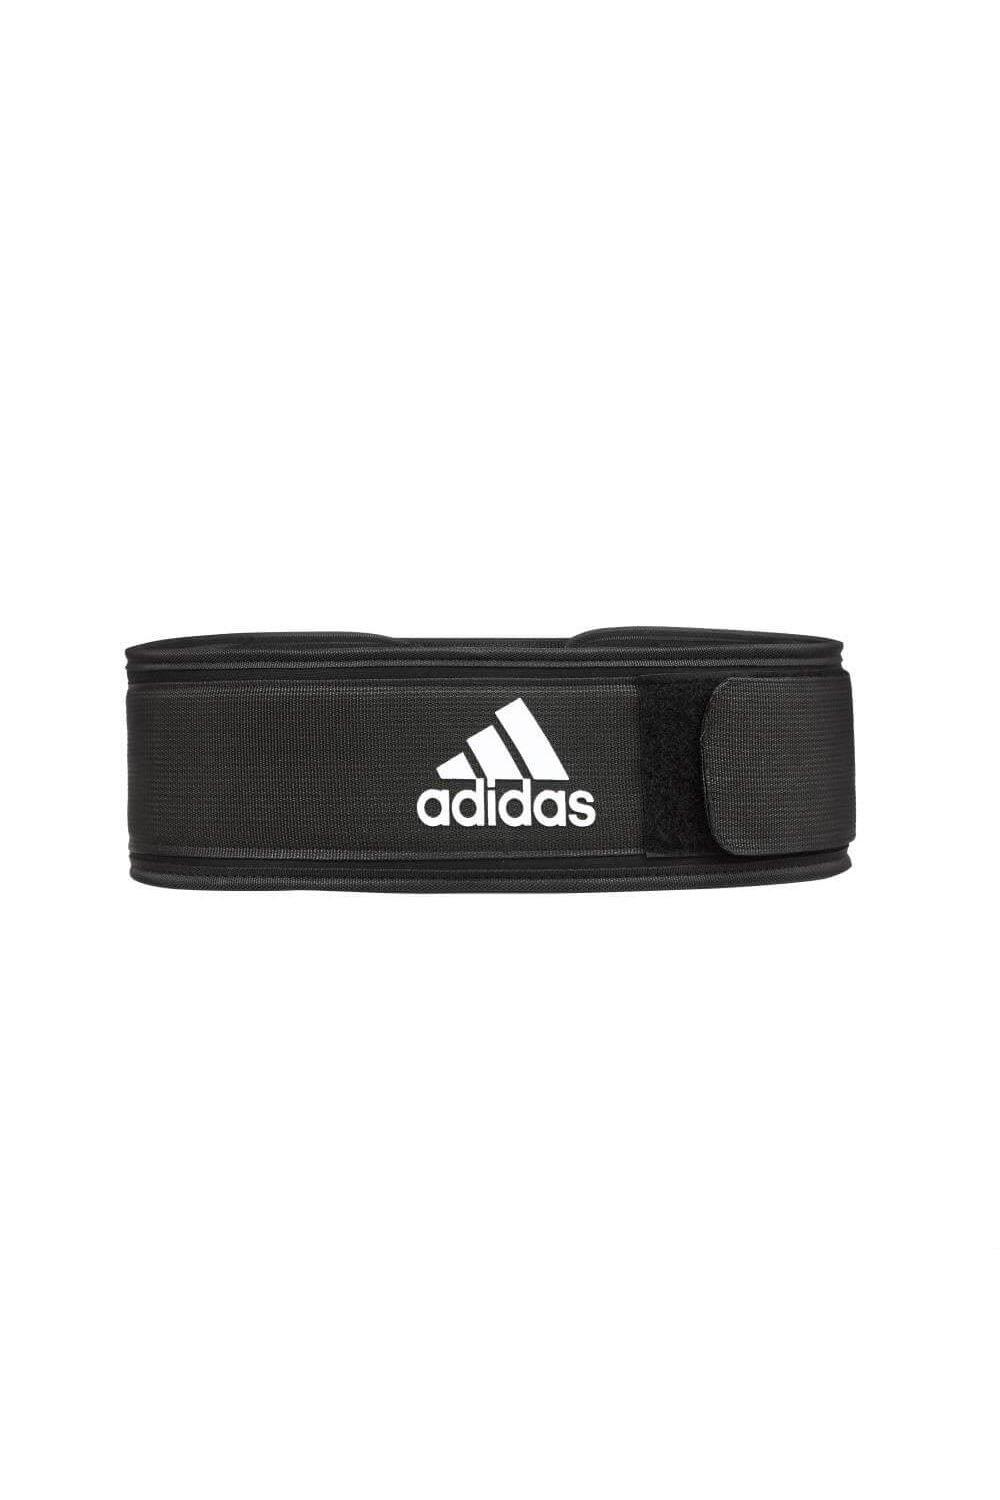 Adidas Essential Weight Lifting Belt|Size: XXL|black